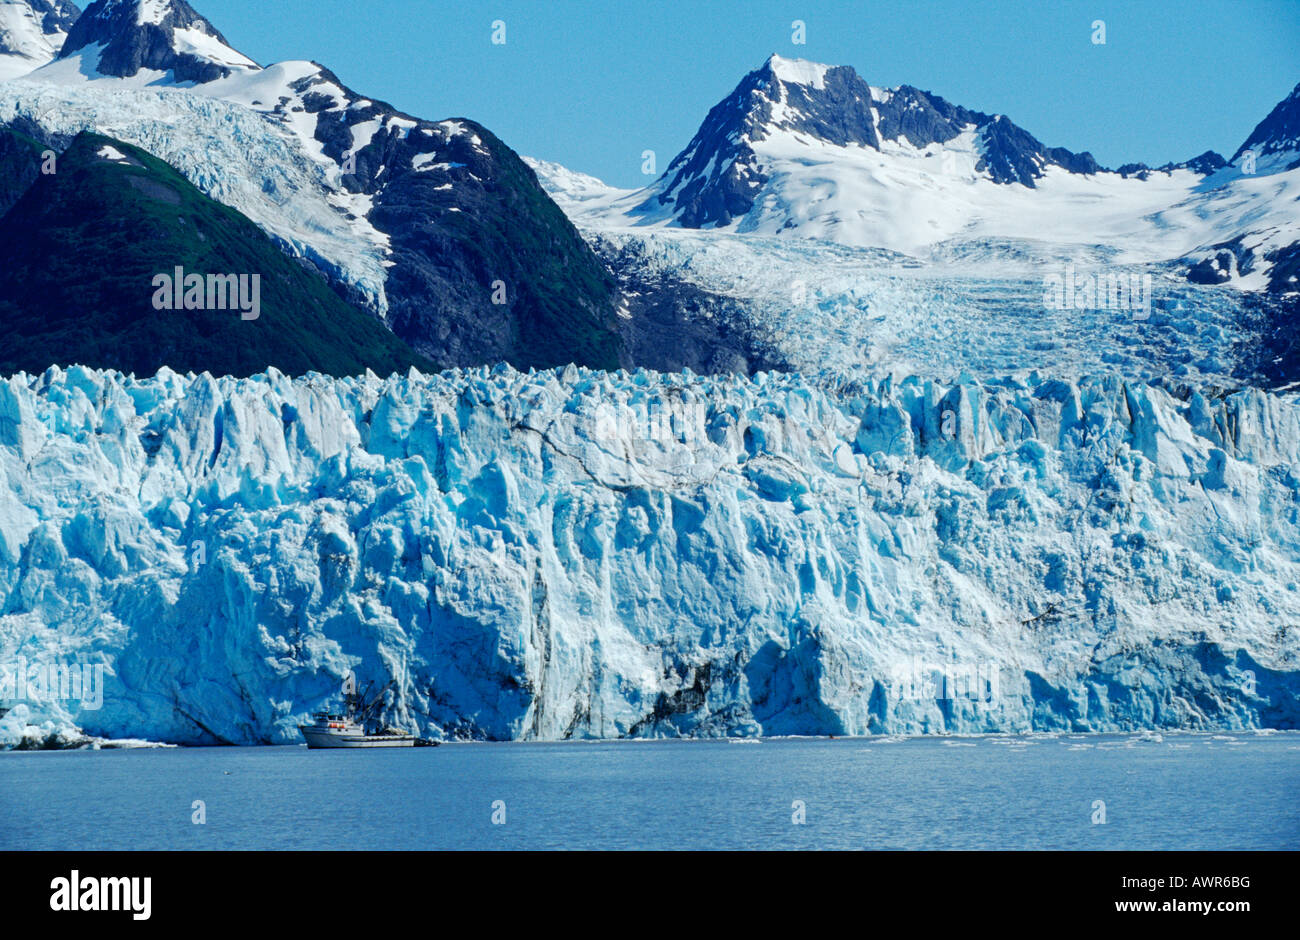 Meares Glacier flowing into the sea, Prince William Sound, Alaska, USA Stock Photo